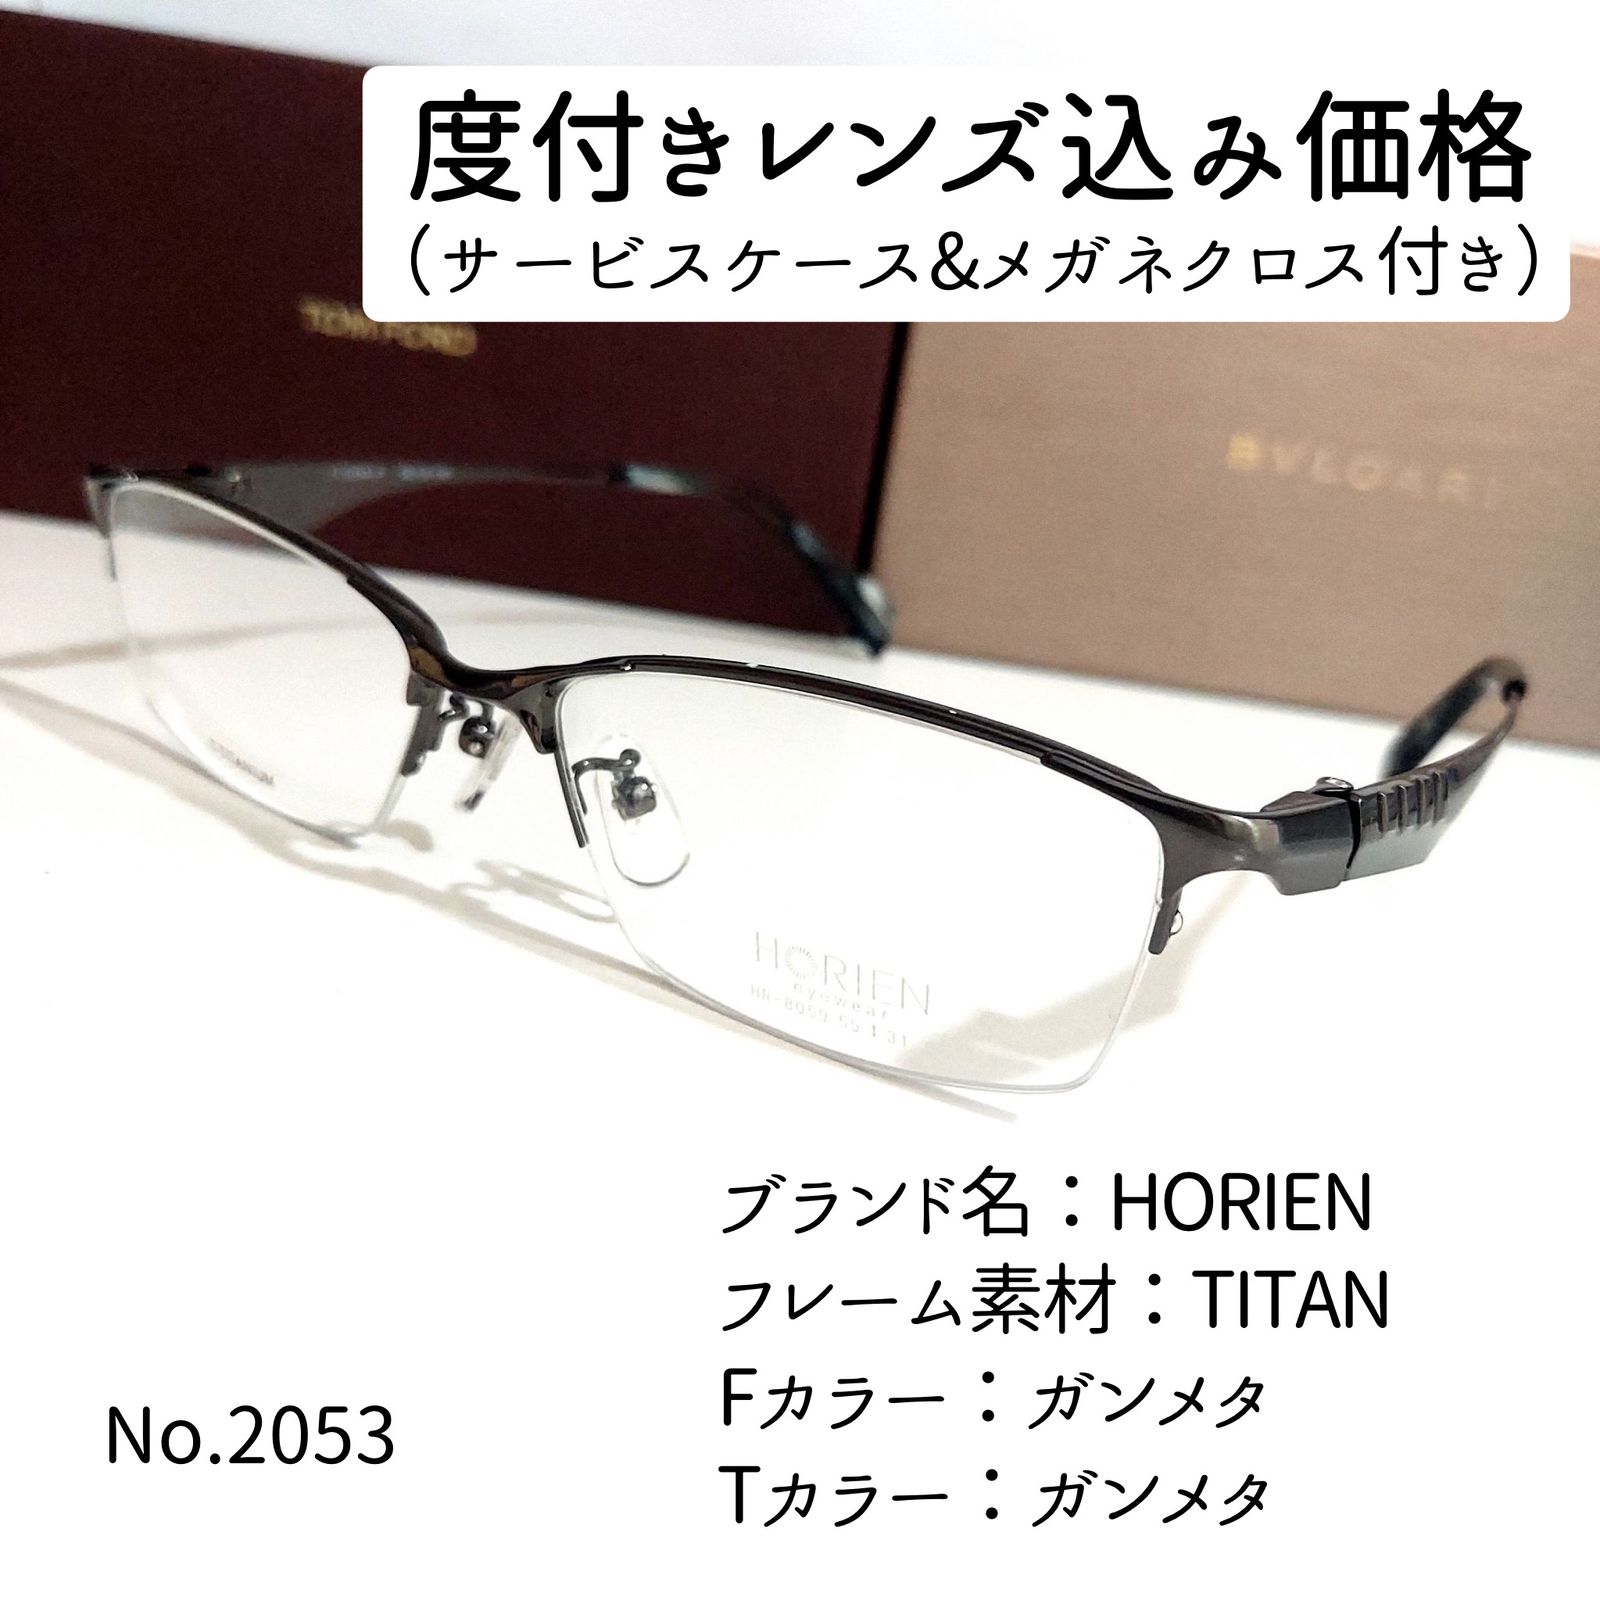 No.2053-メガネ HORIEN【フレームのみ価格】-